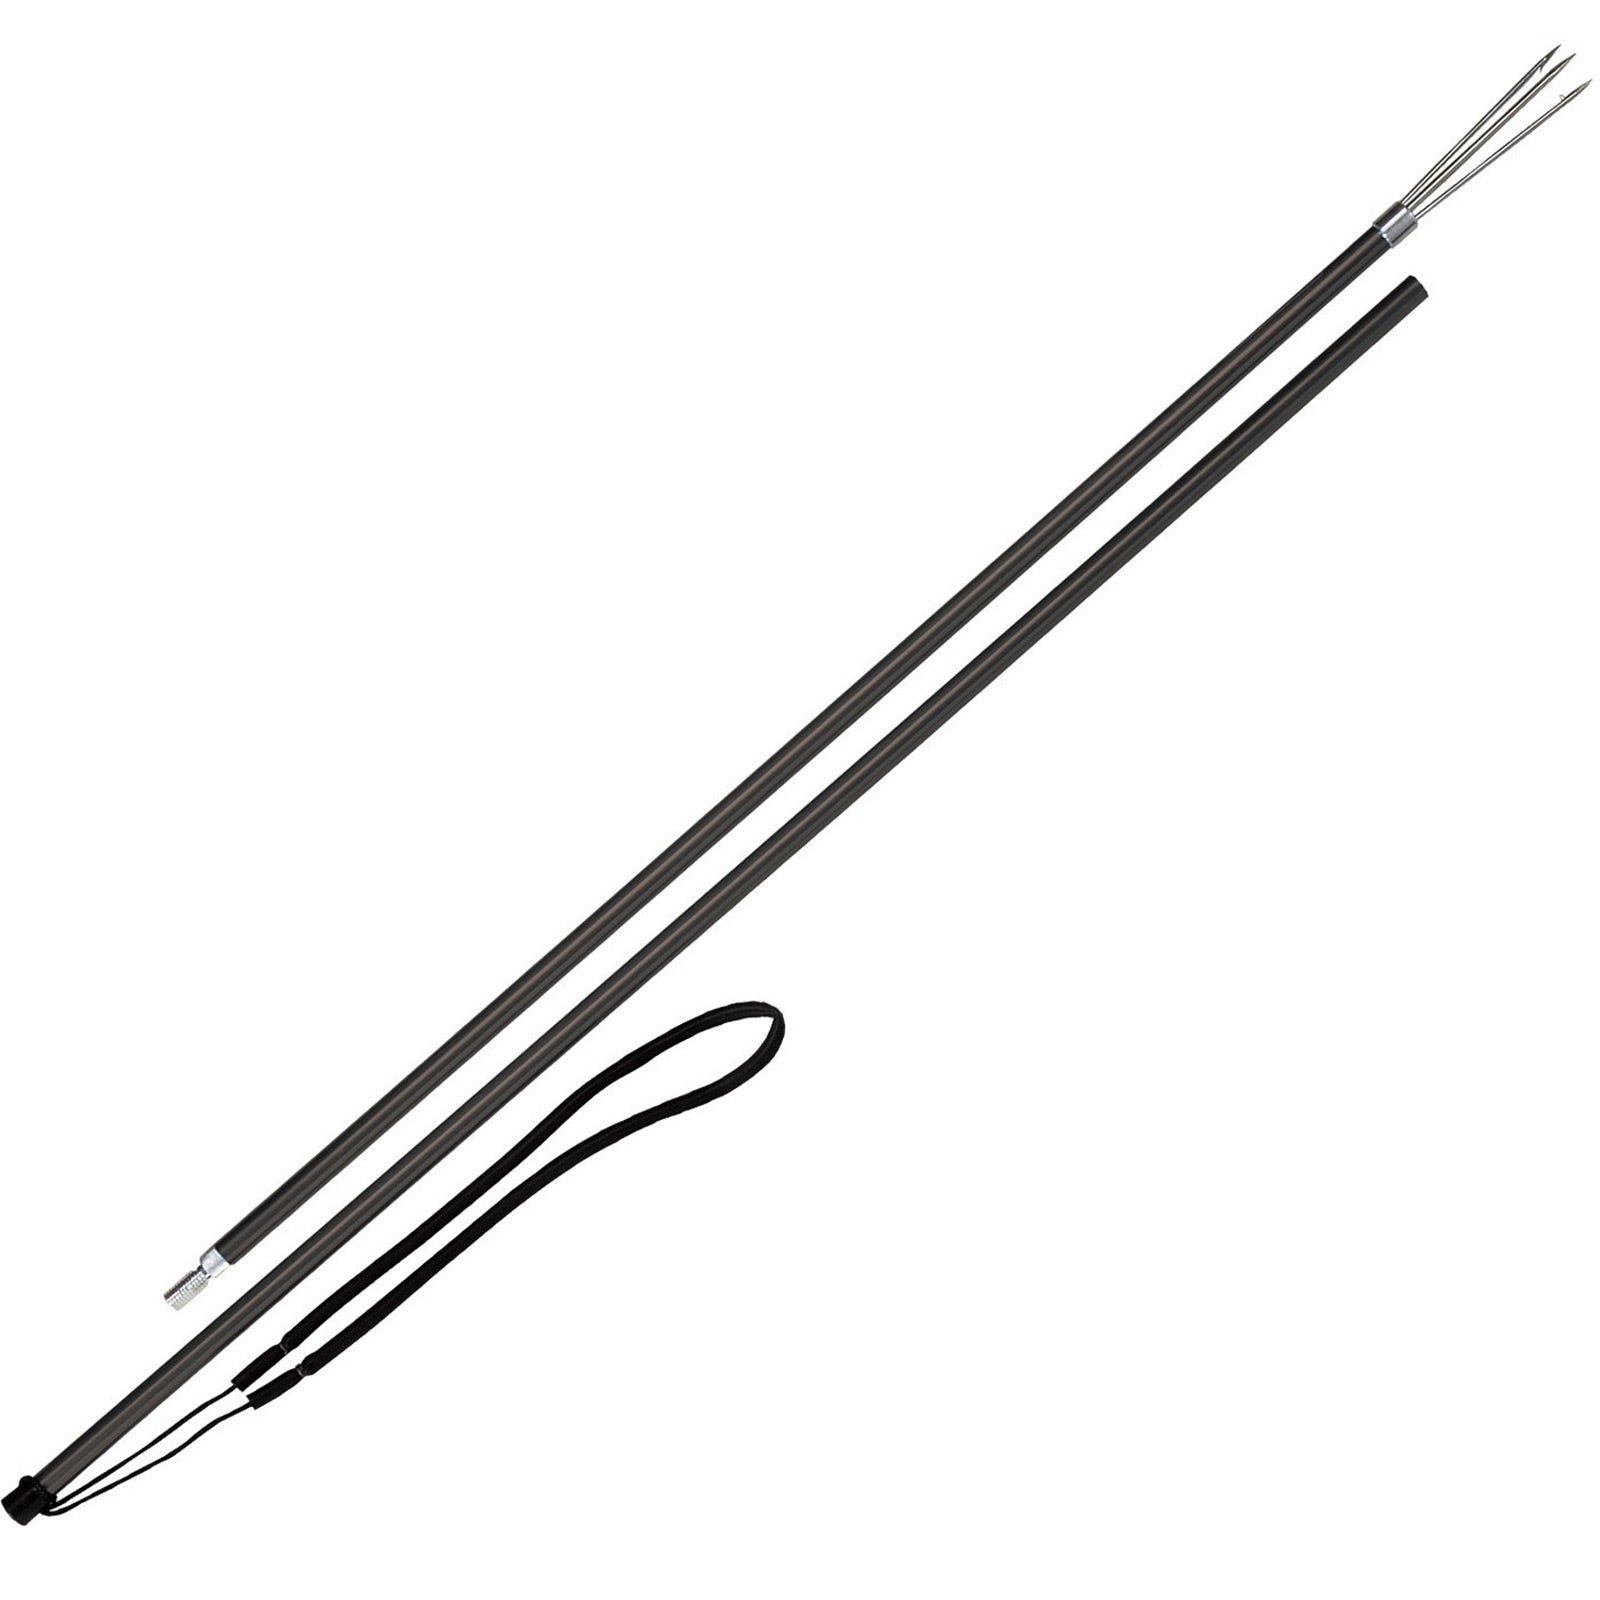 Aluminum 2 Segment Pole Spear